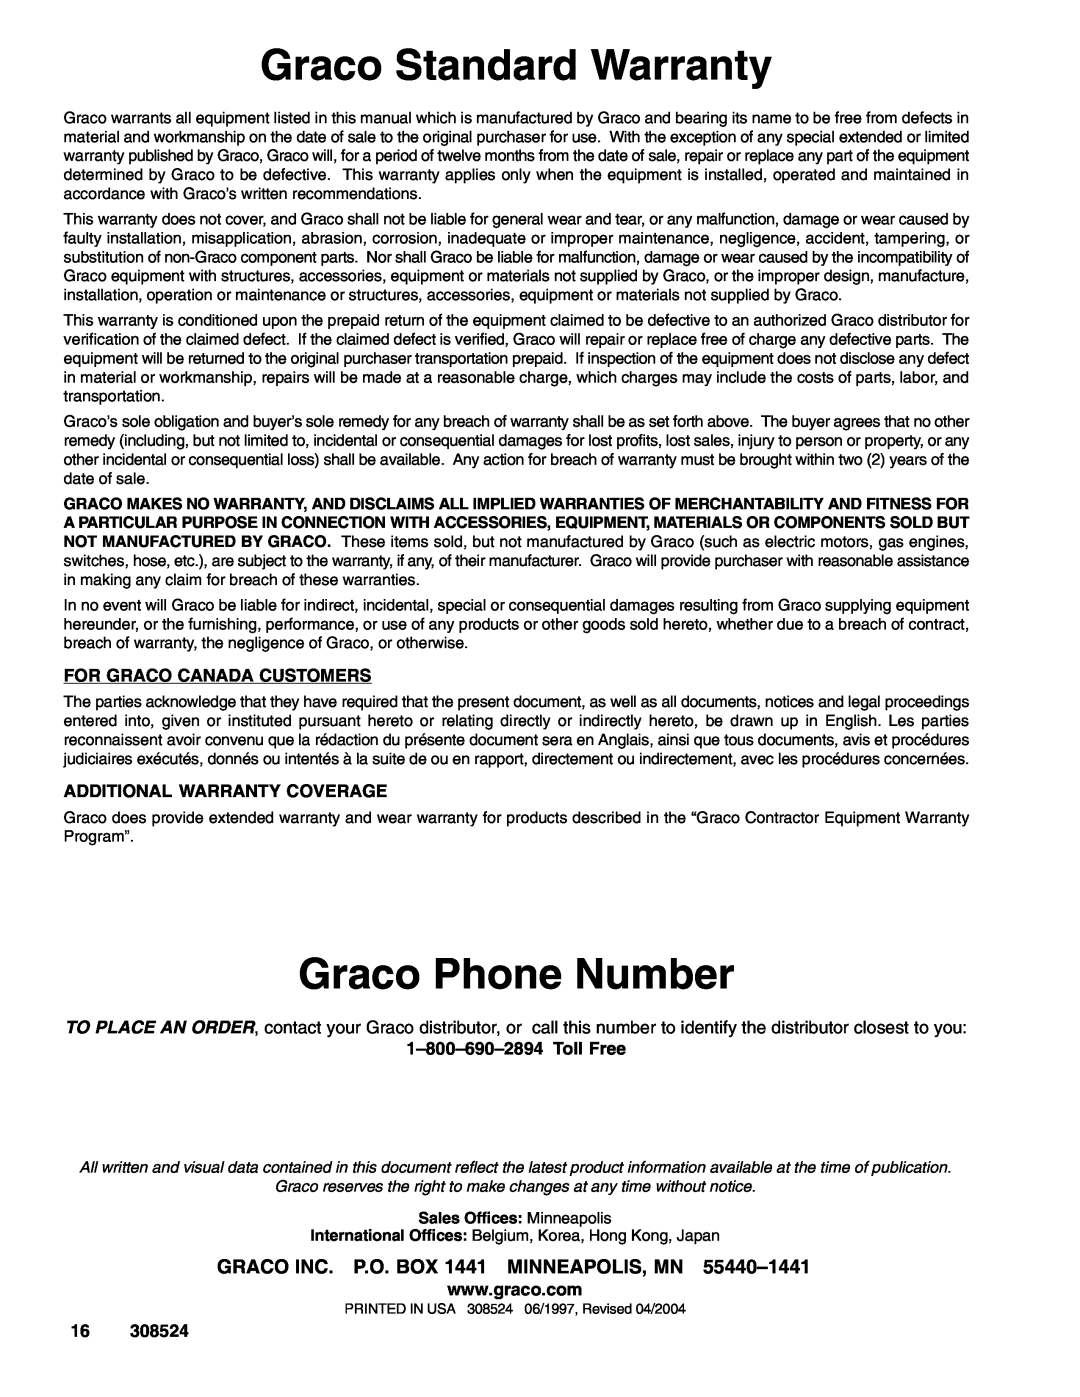 Graco 3235, Series B, 3400 psi, 3040 Graco Standard Warranty, Graco Phone Number, GRACO INC. P.O. BOX 1441 MINNEAPOLIS, MN 